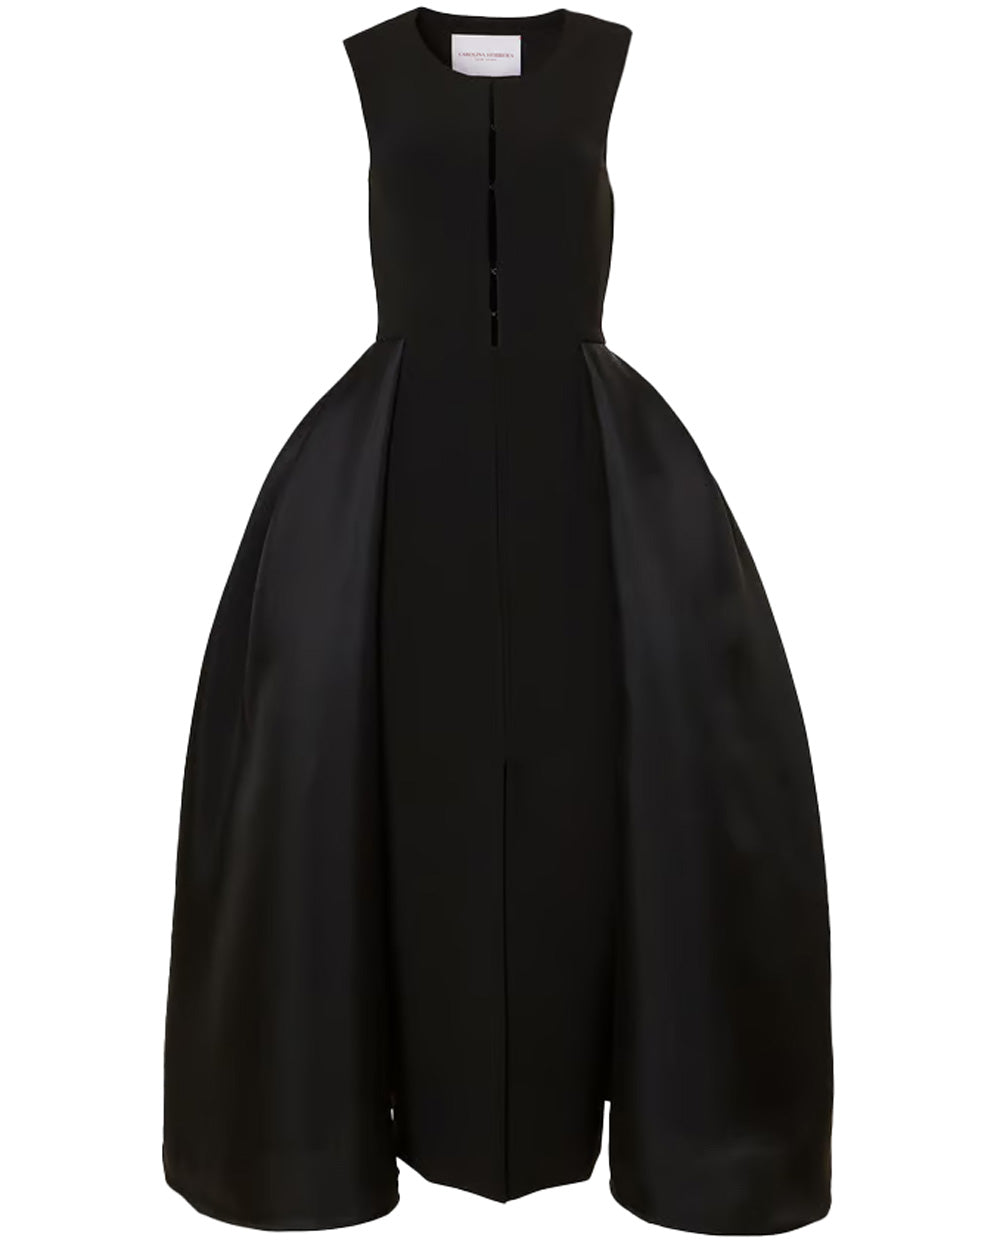 Black Sleeveless Column Dress